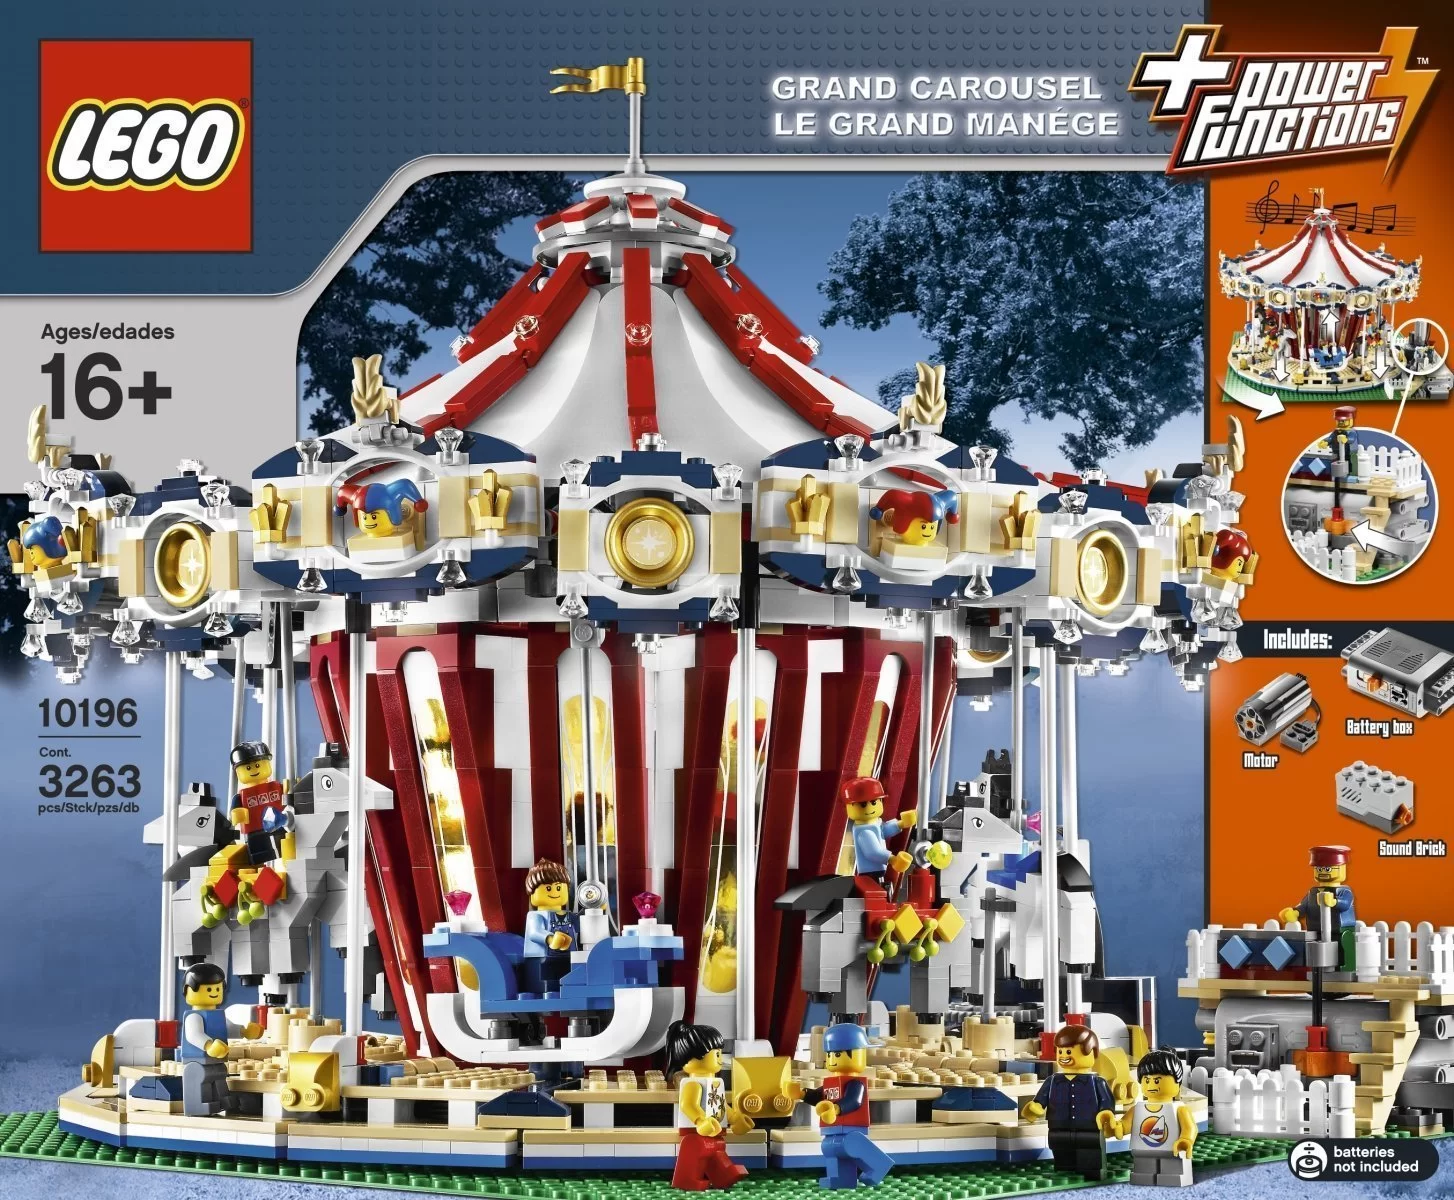  Lego Grand Carousel